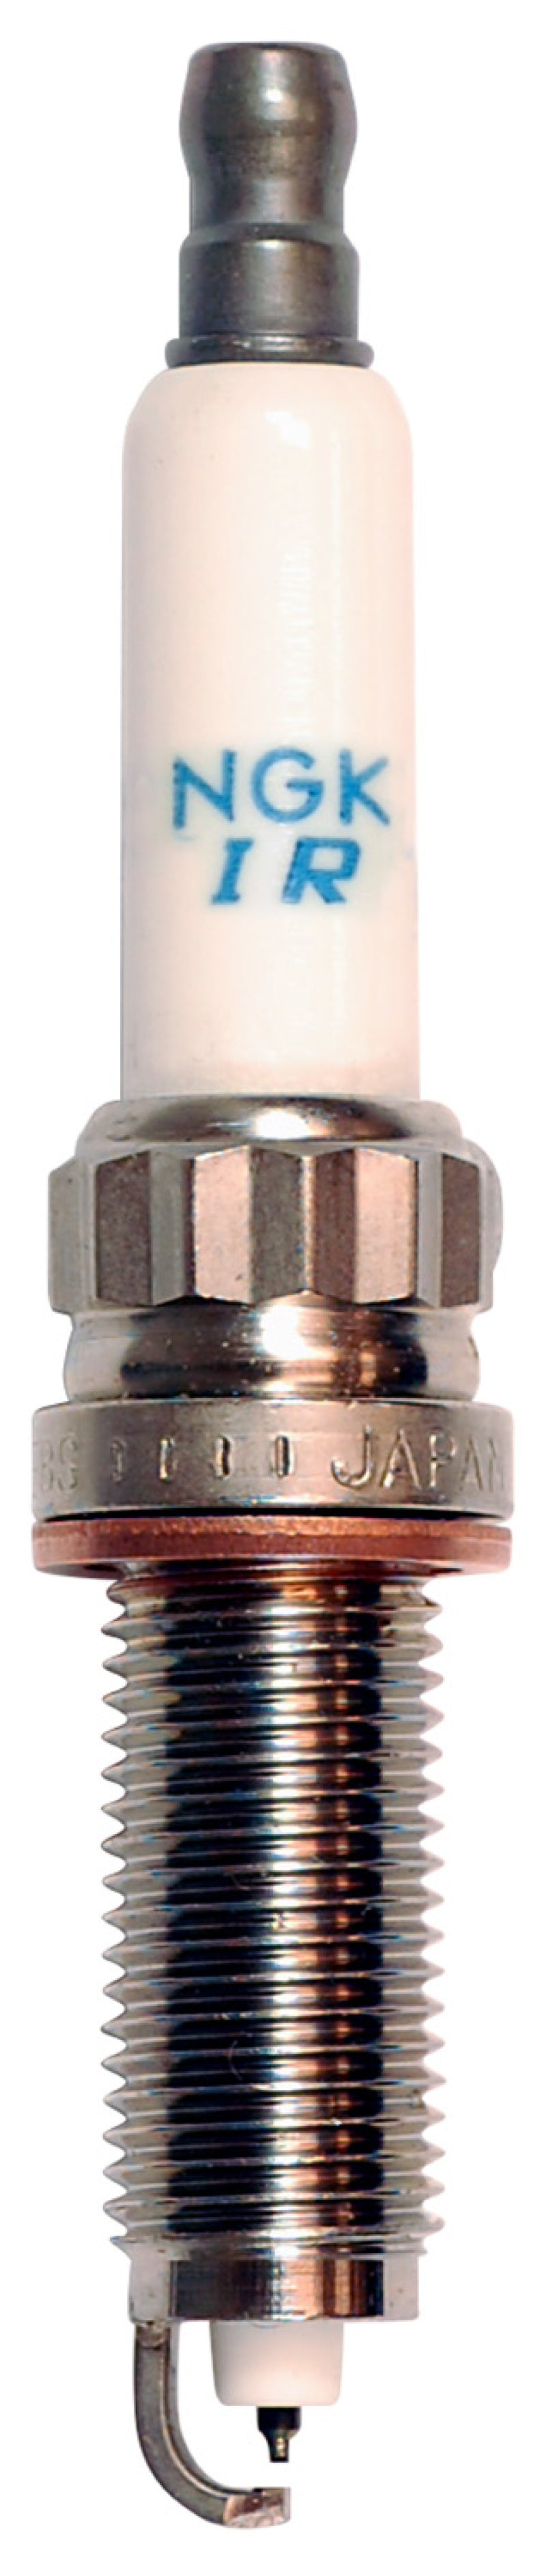 NGK Laser Iridium Spark Plug Box of 4 (SILZKBR8D8S)